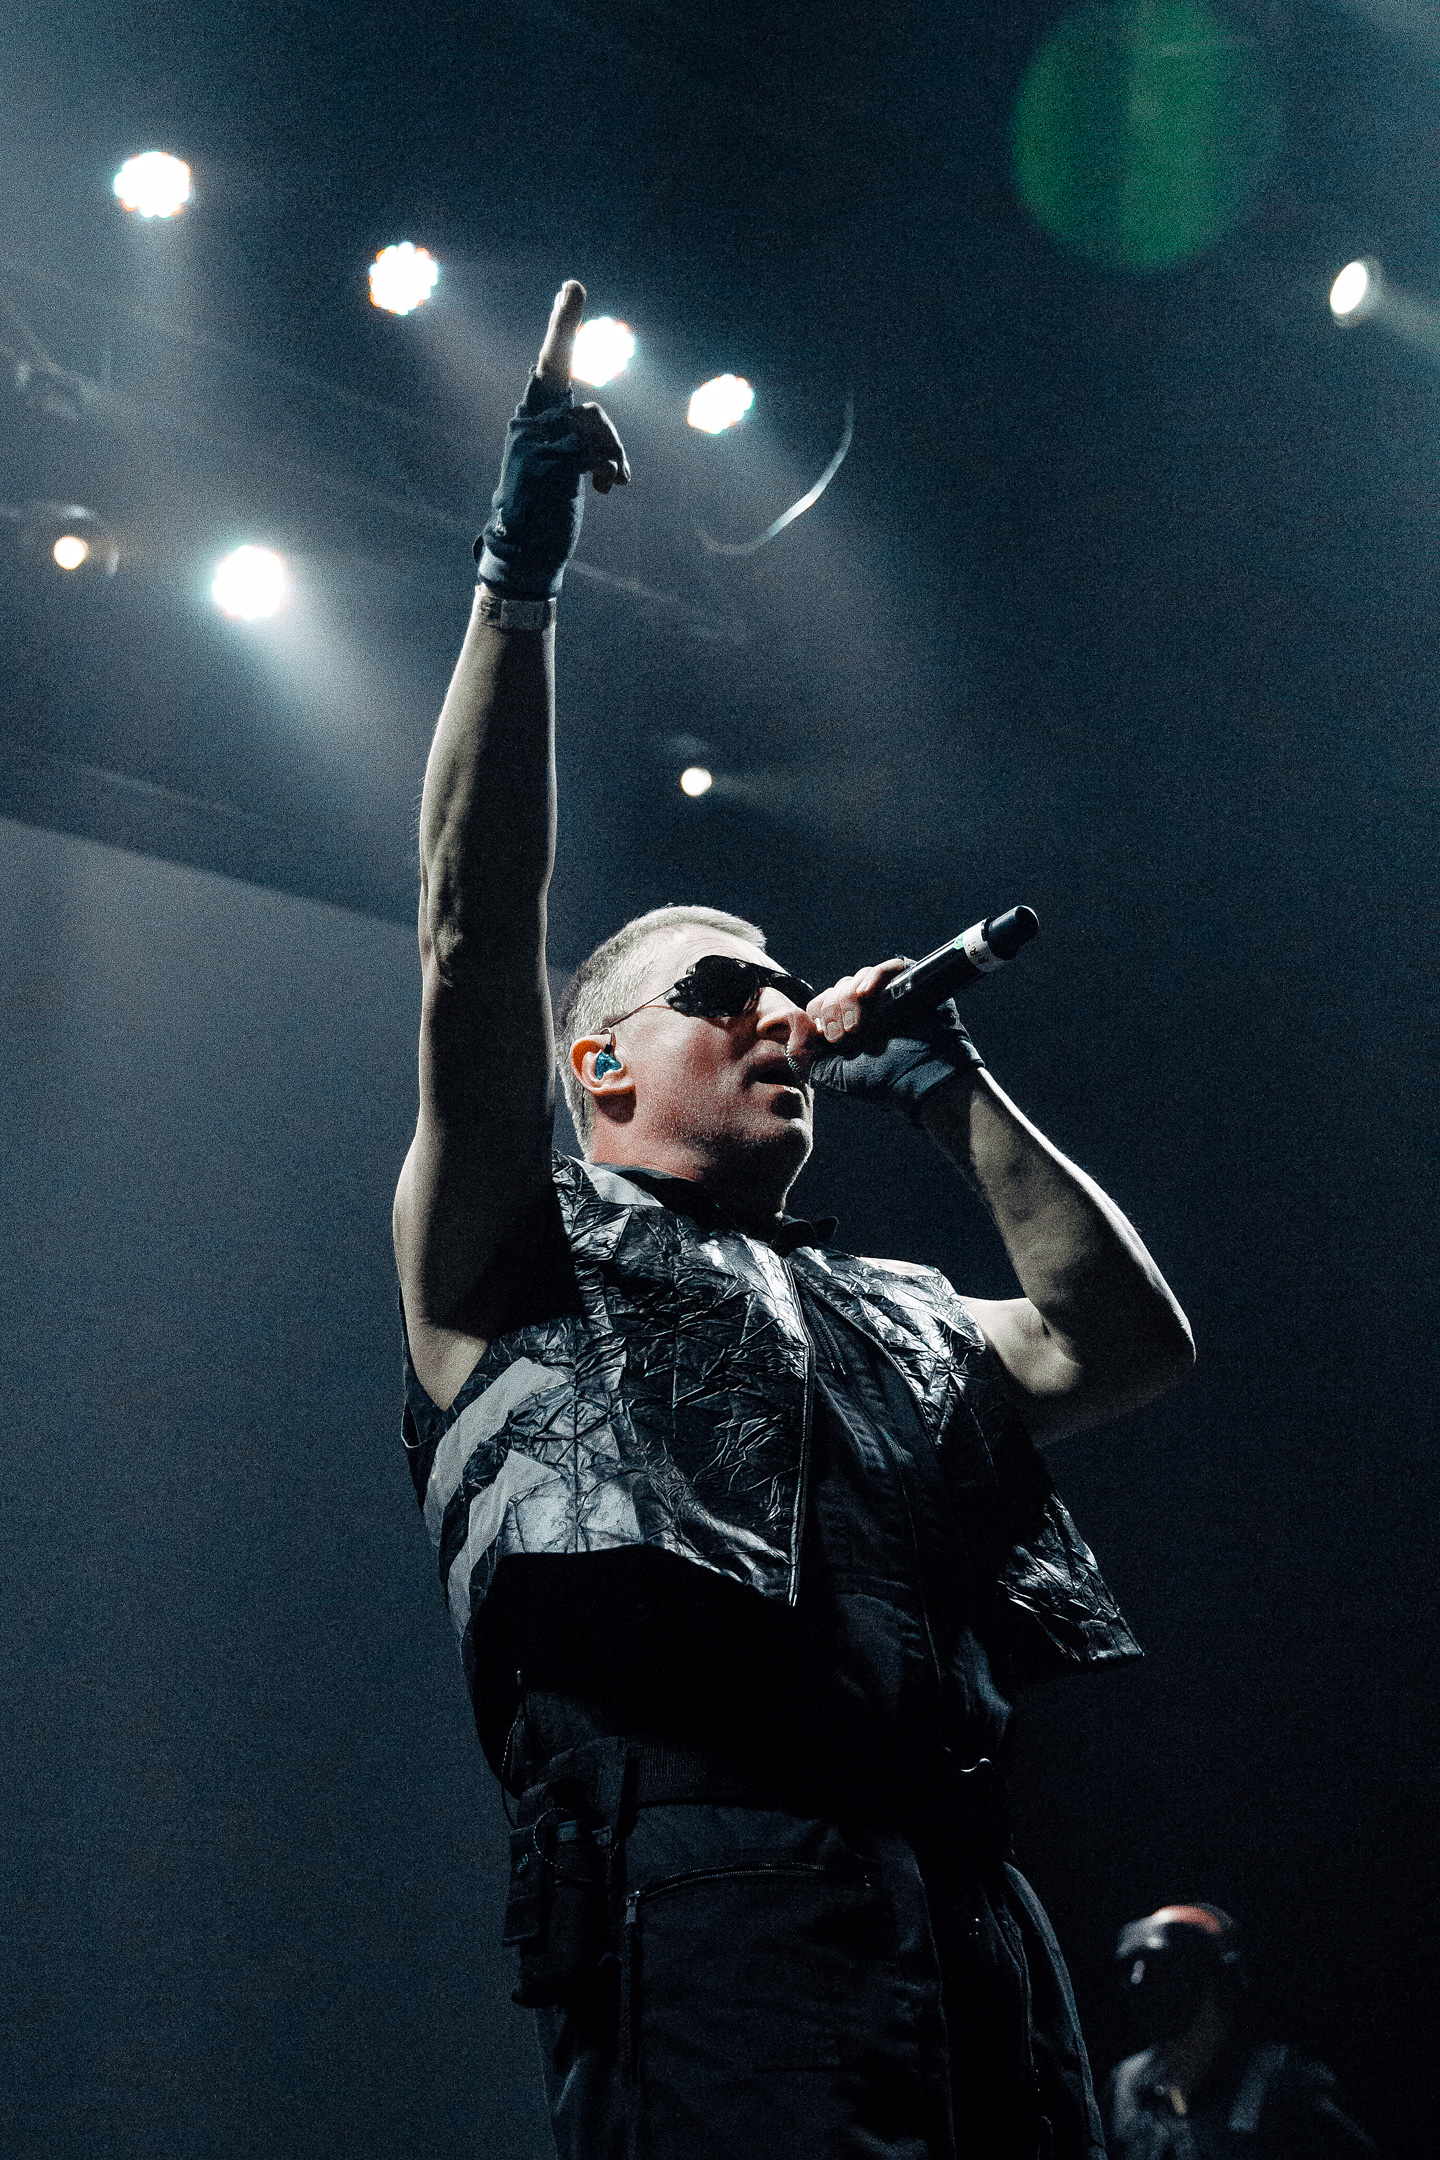 Front 242 - Concert Photos - Denver 2018